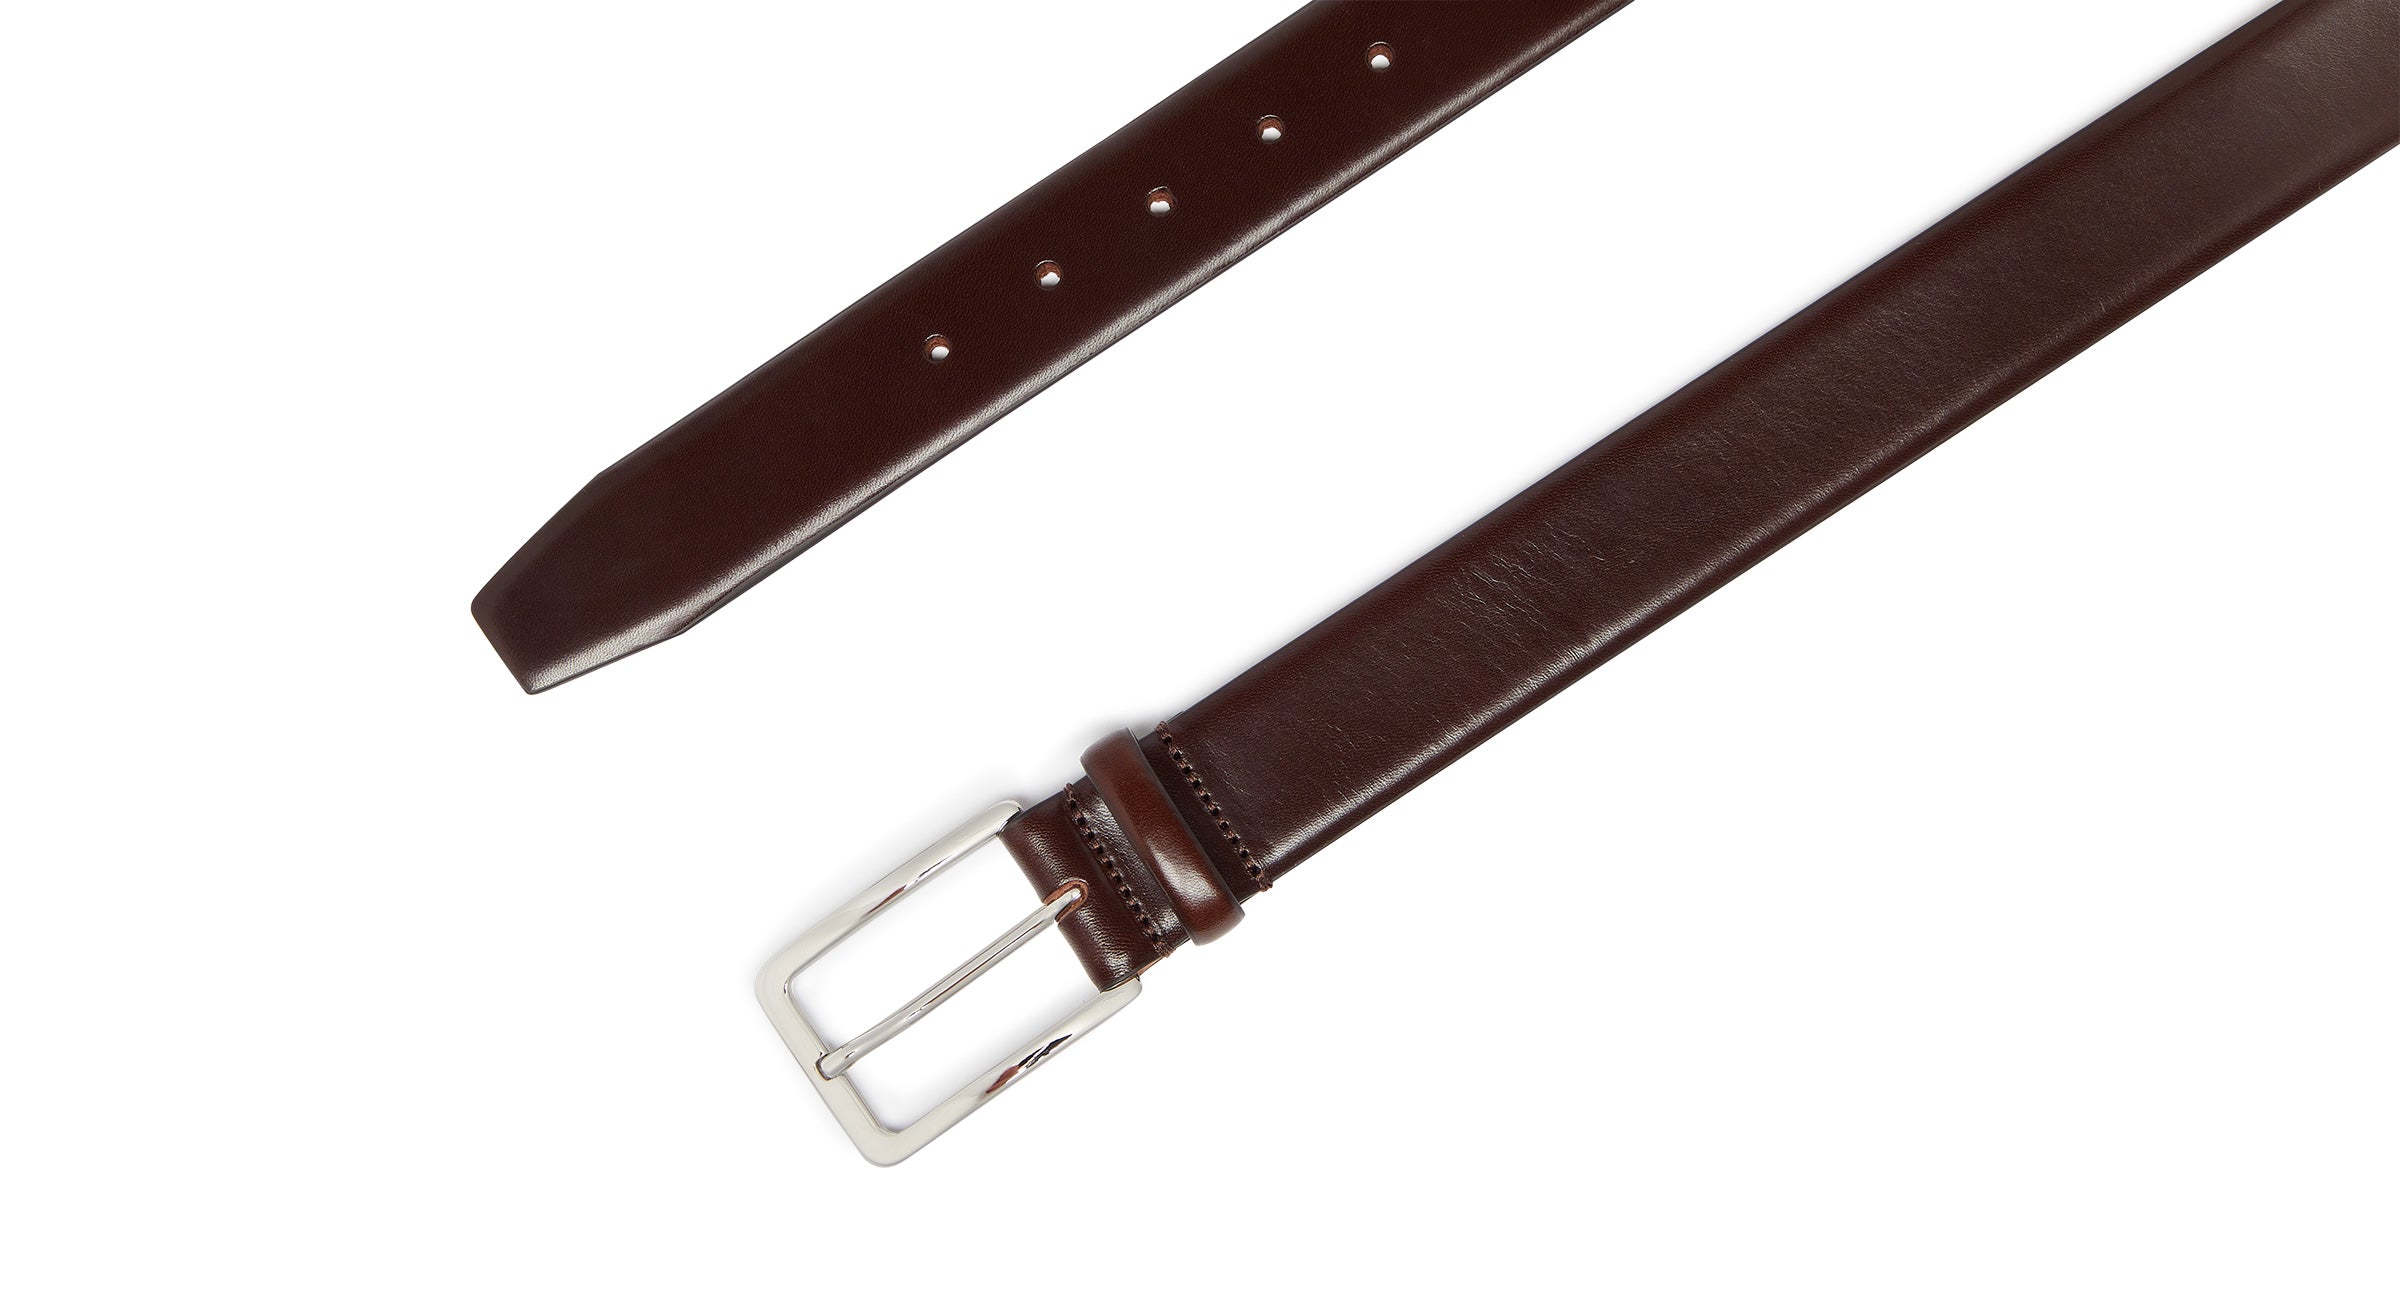 Lumini Brown | Calf Leather Belt | Men's Belts | Oliver Sweeney